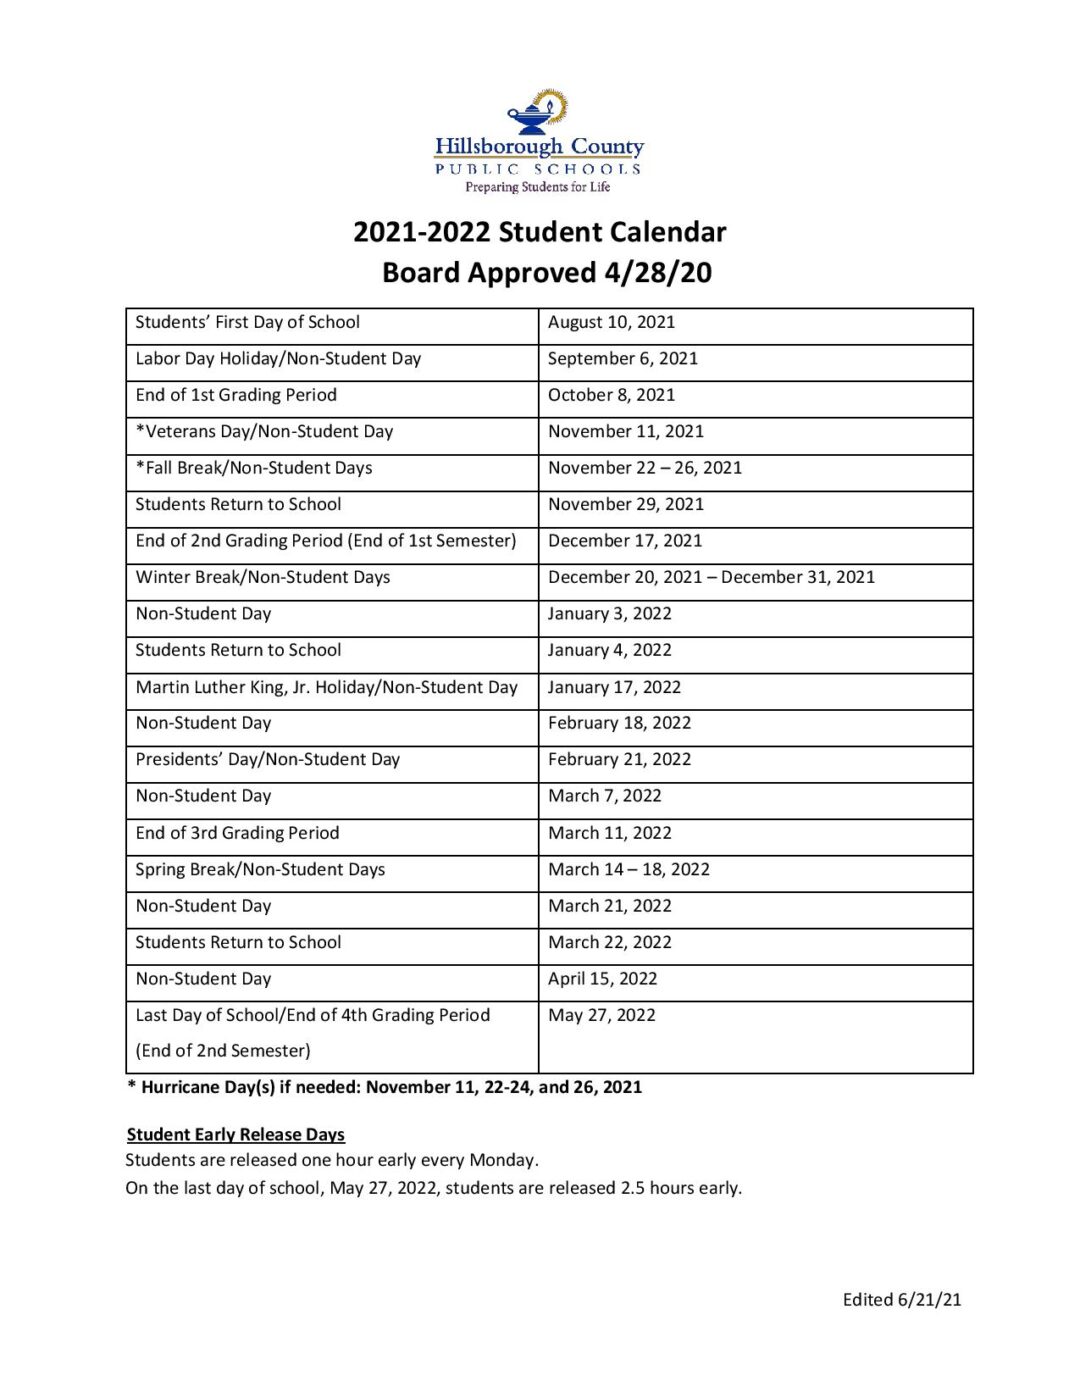 Hillsborough County School Calendar 2025 2026